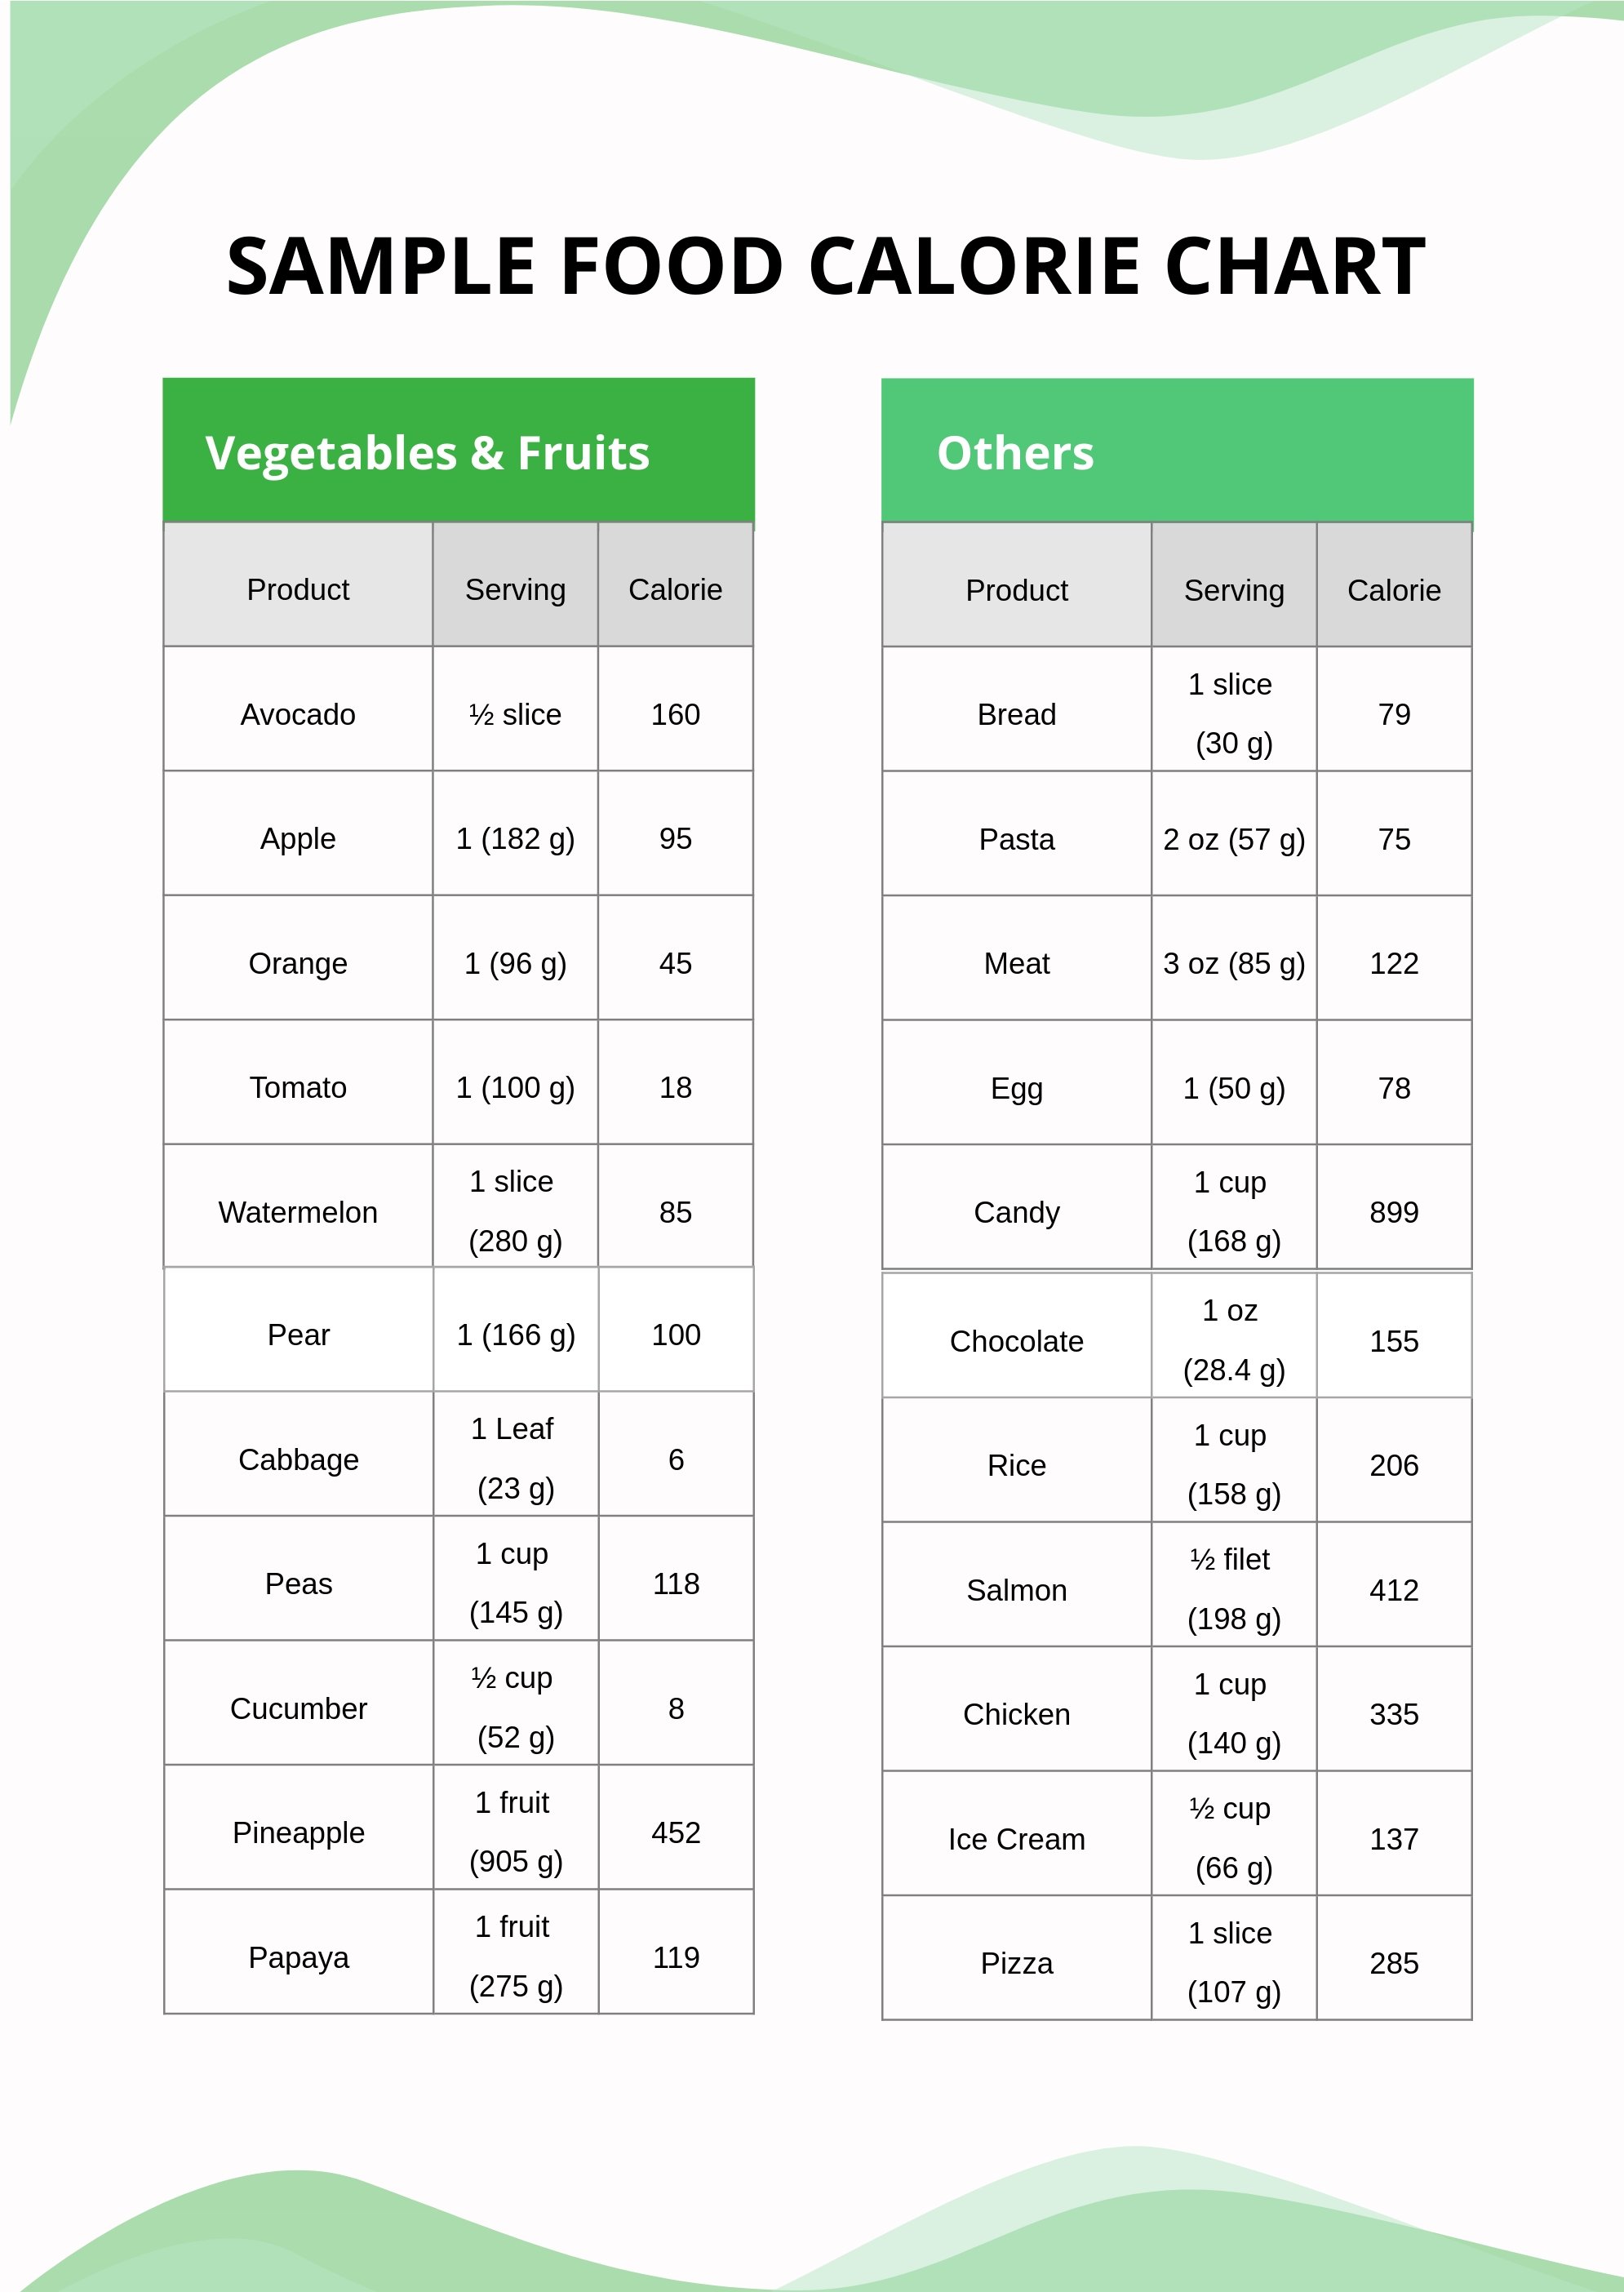 Free Sample Food Calorie Chart Template in PDF, Illustrator